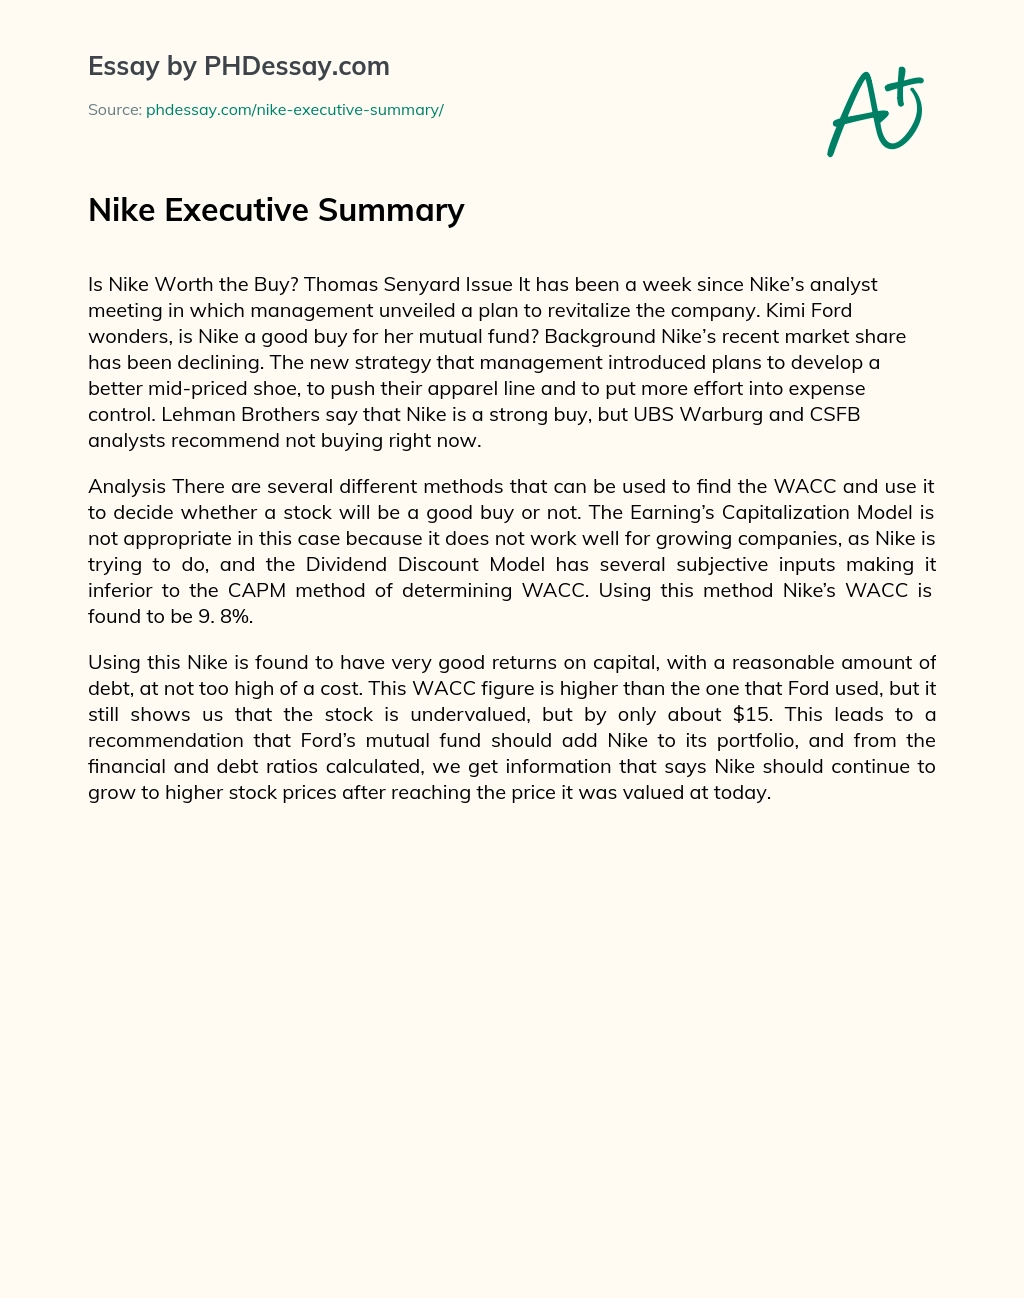 Nike Executive Summary essay